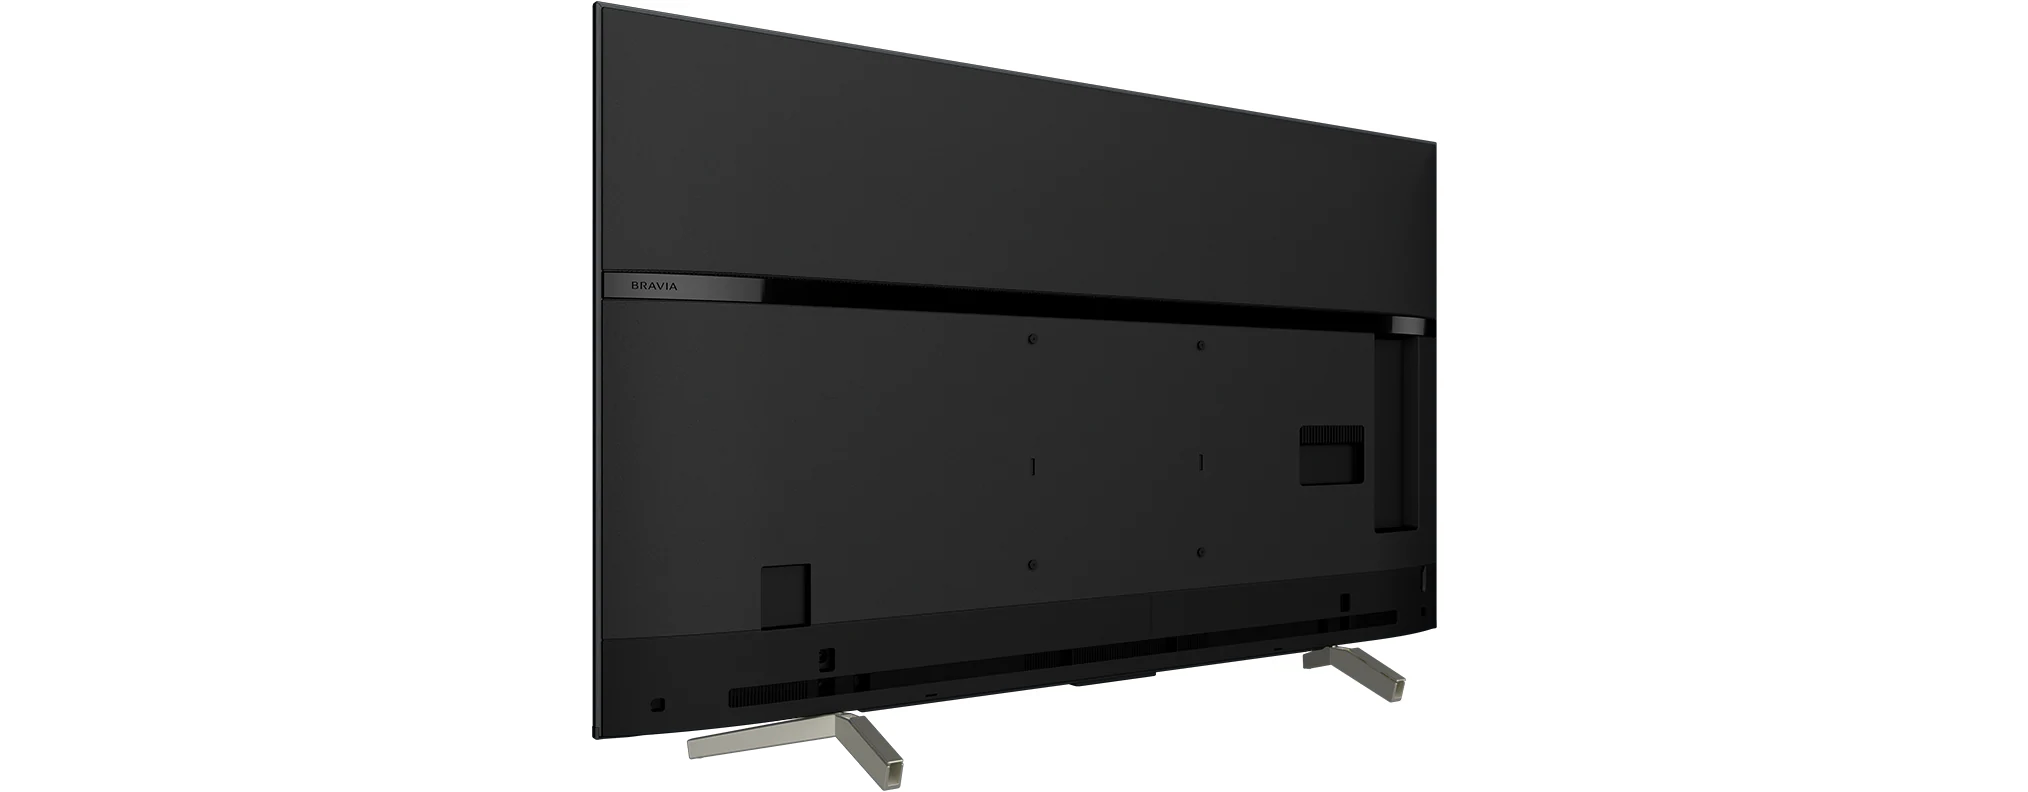 تلویزیون سونی مدل KD-X8500F